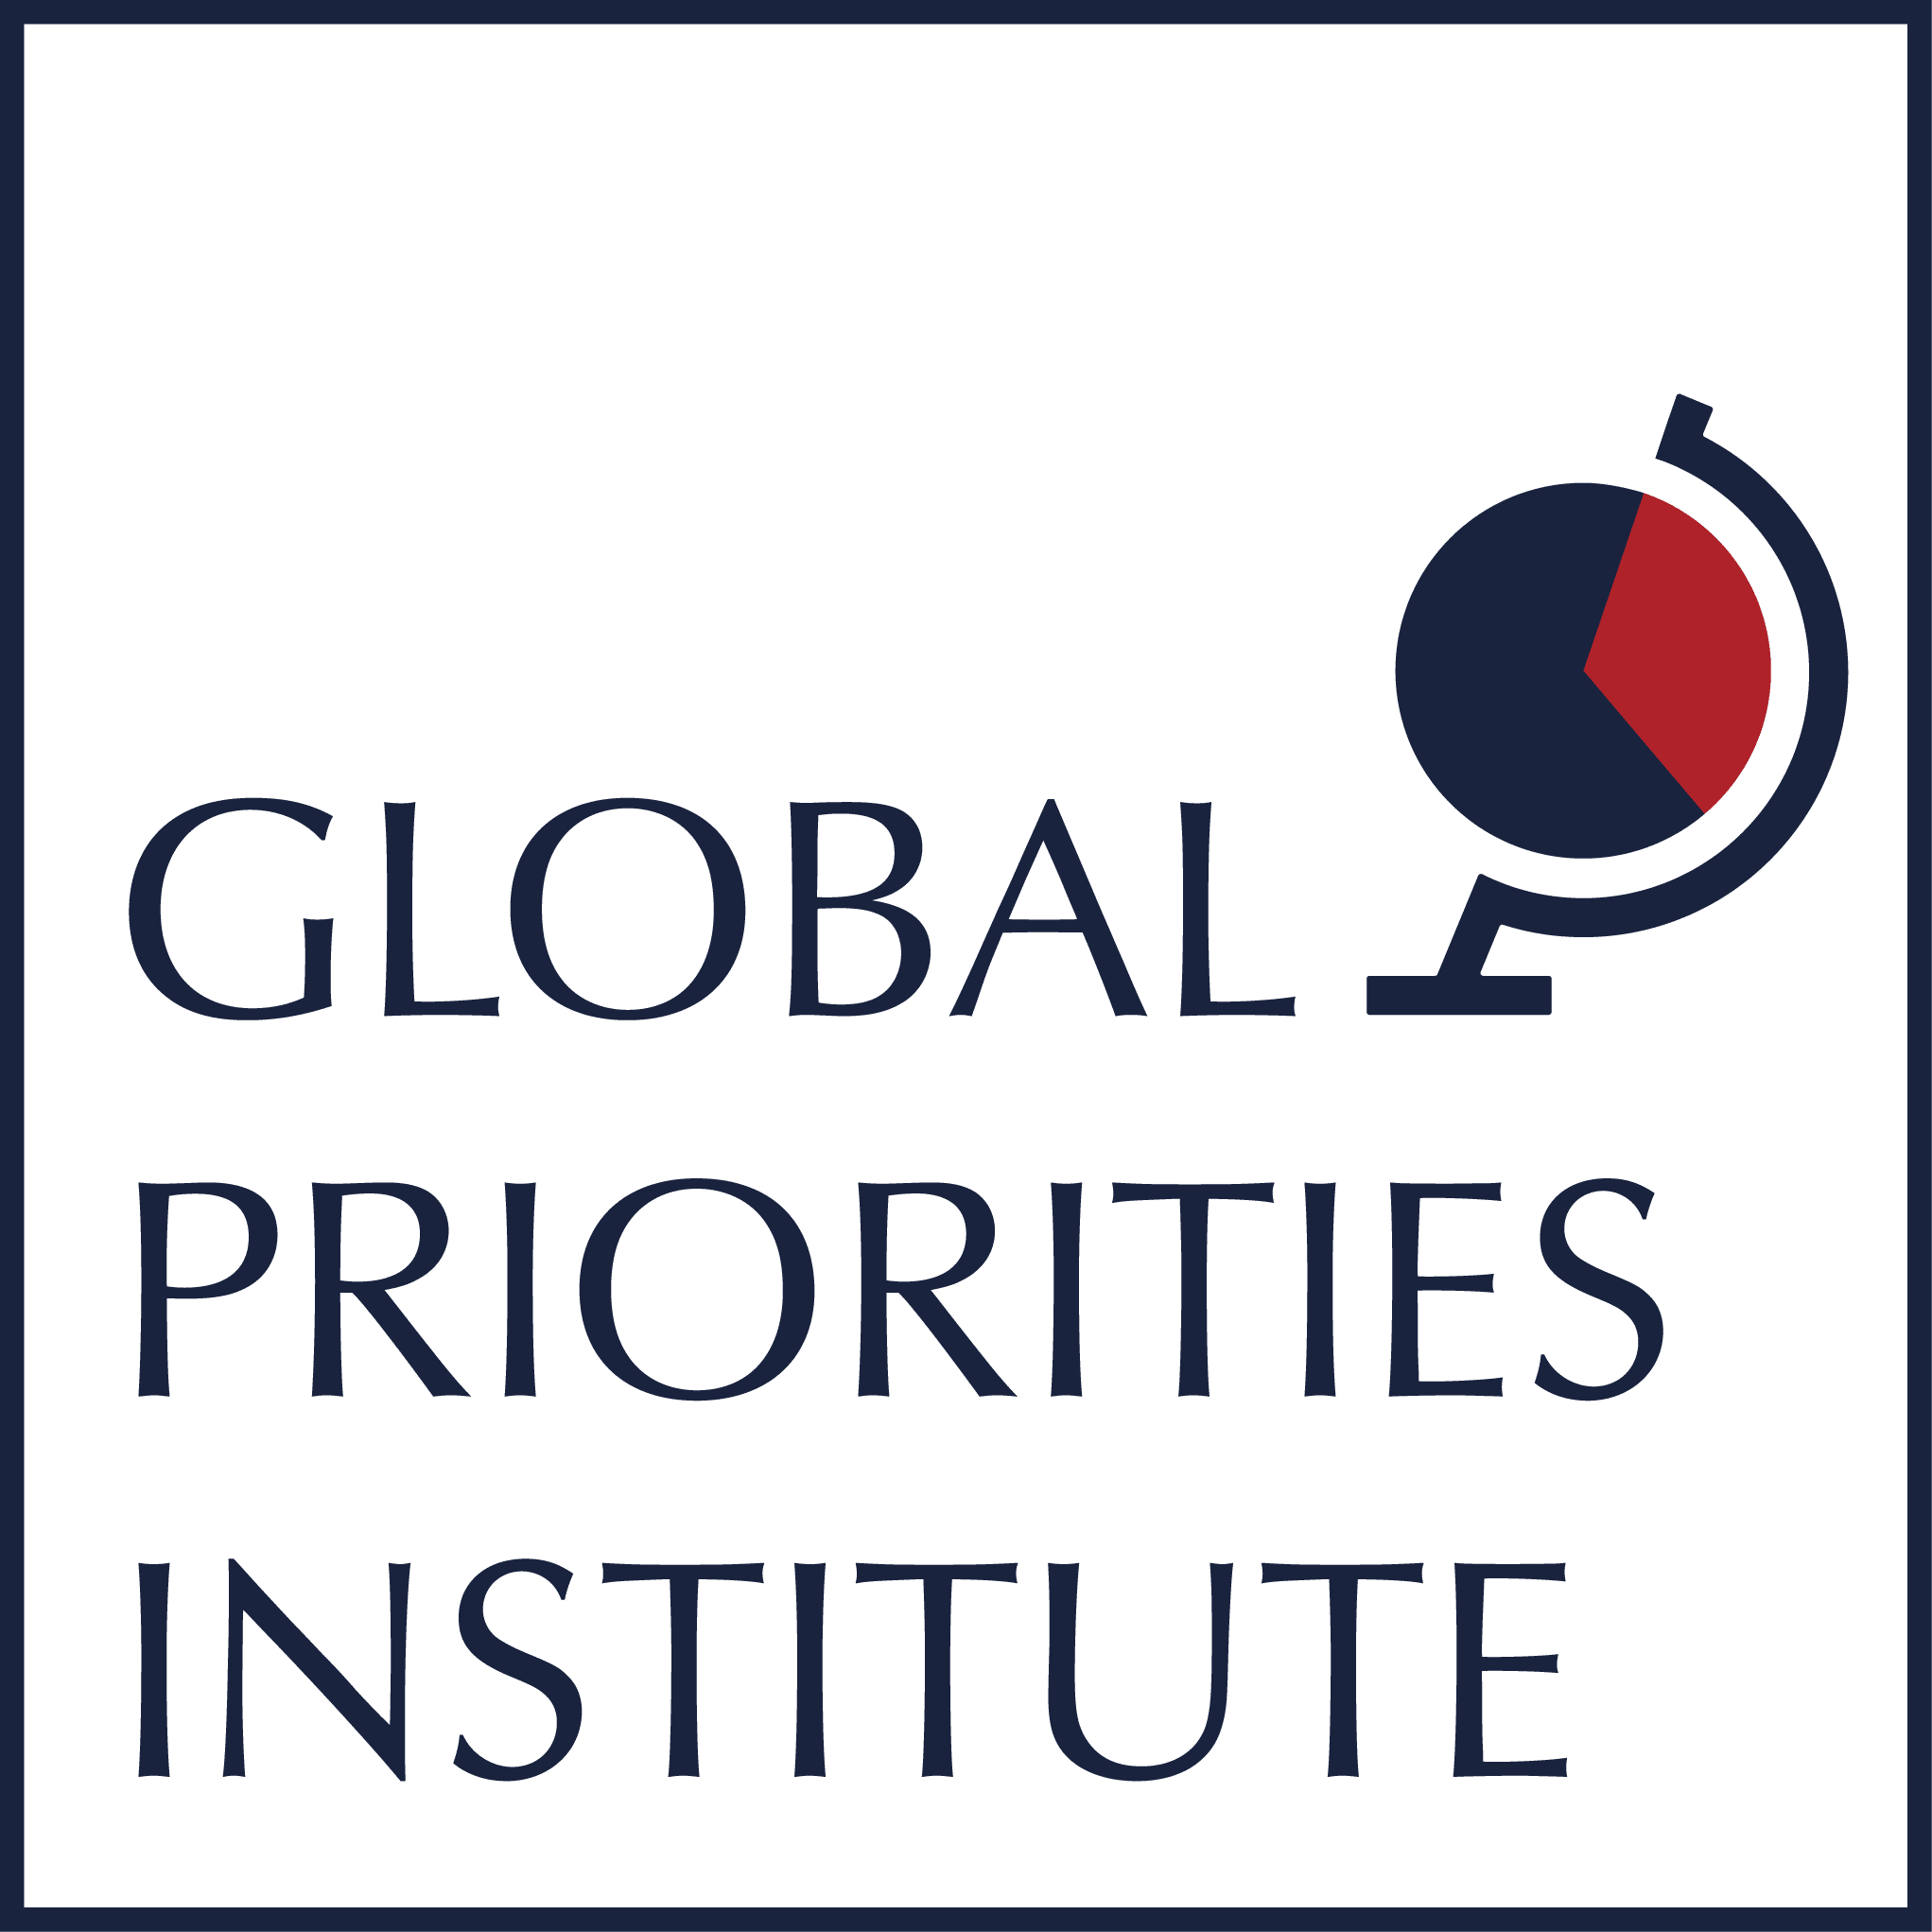 (c) Globalprioritiesinstitute.org